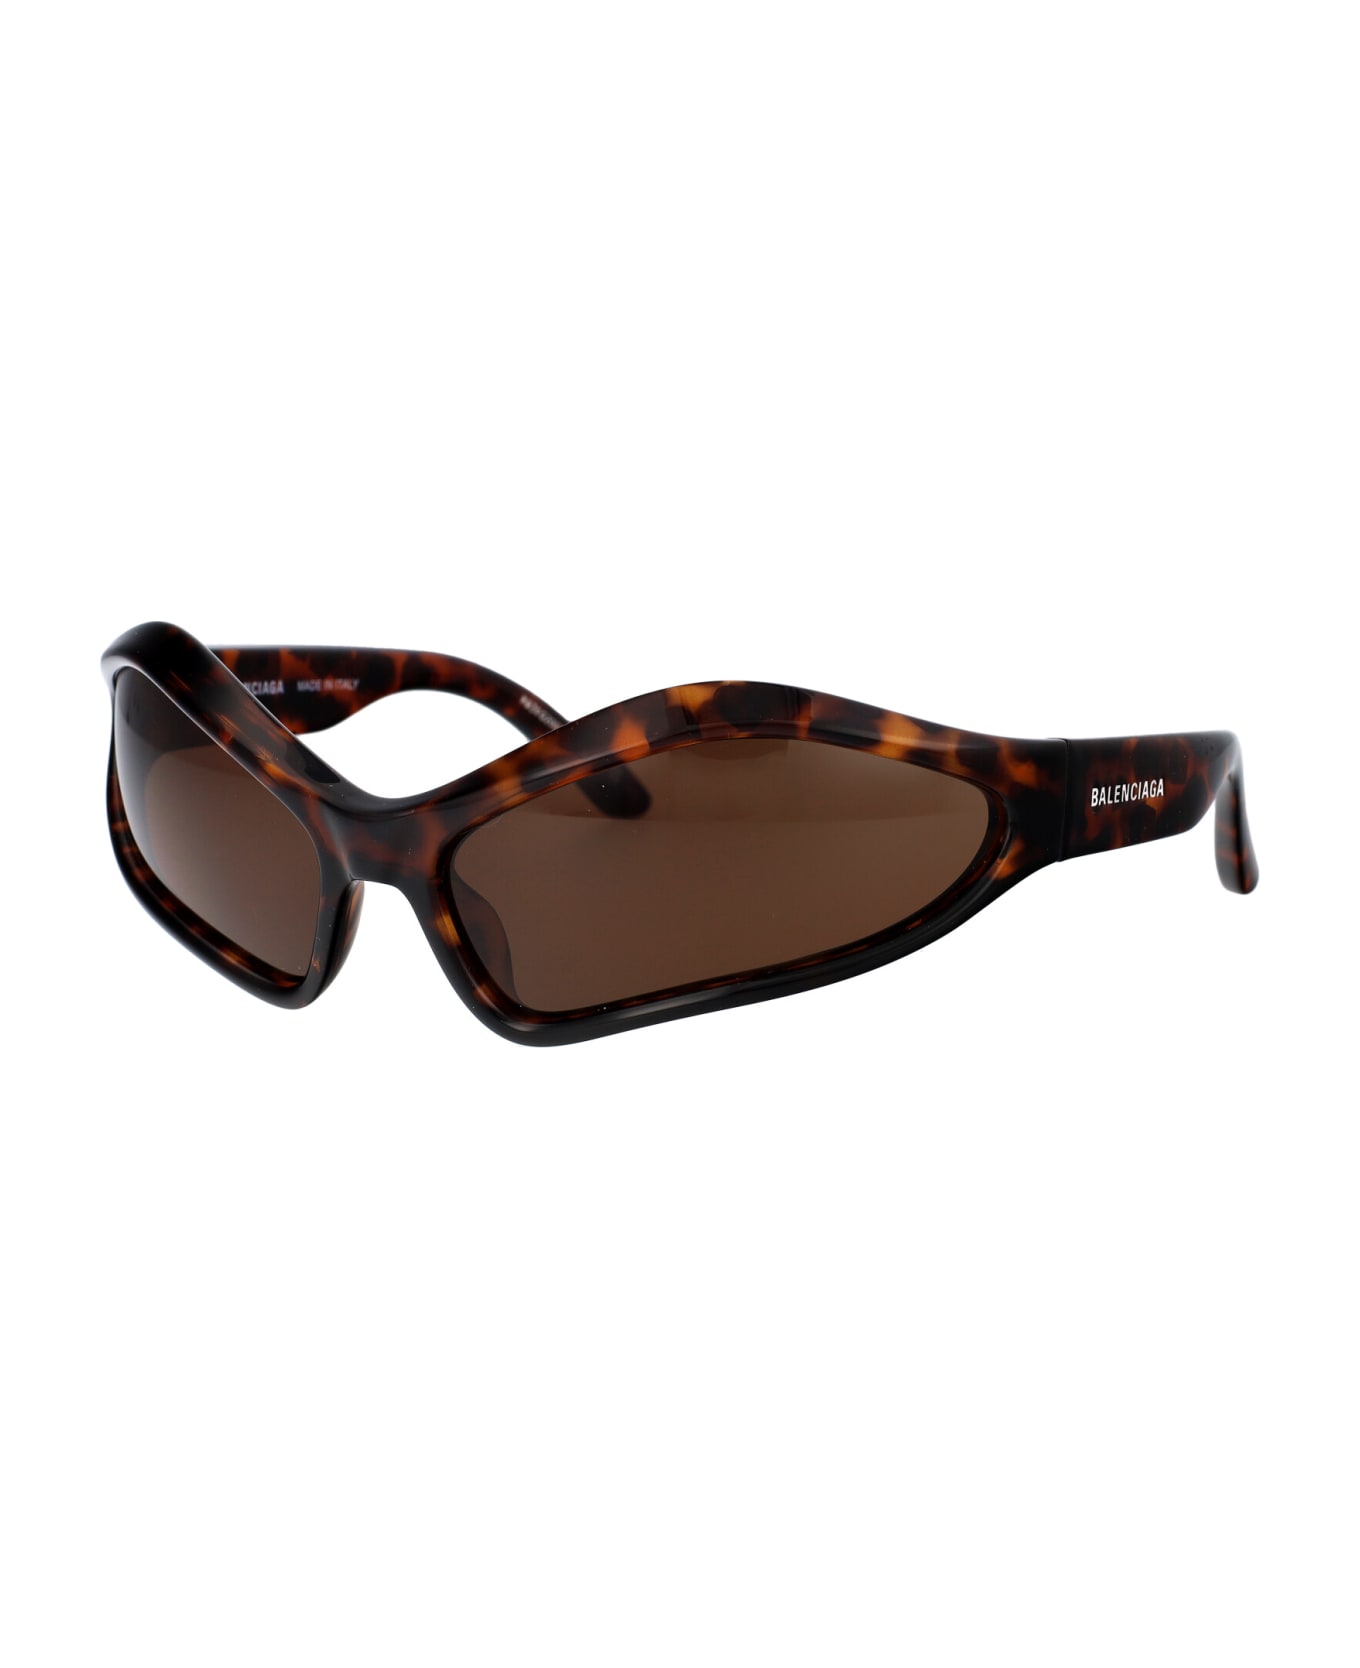 Balenciaga Eyewear Bb0314s Fennec-linea Extreme Sunglasses - 002 HAVANA HAVANA BROWN サングラス